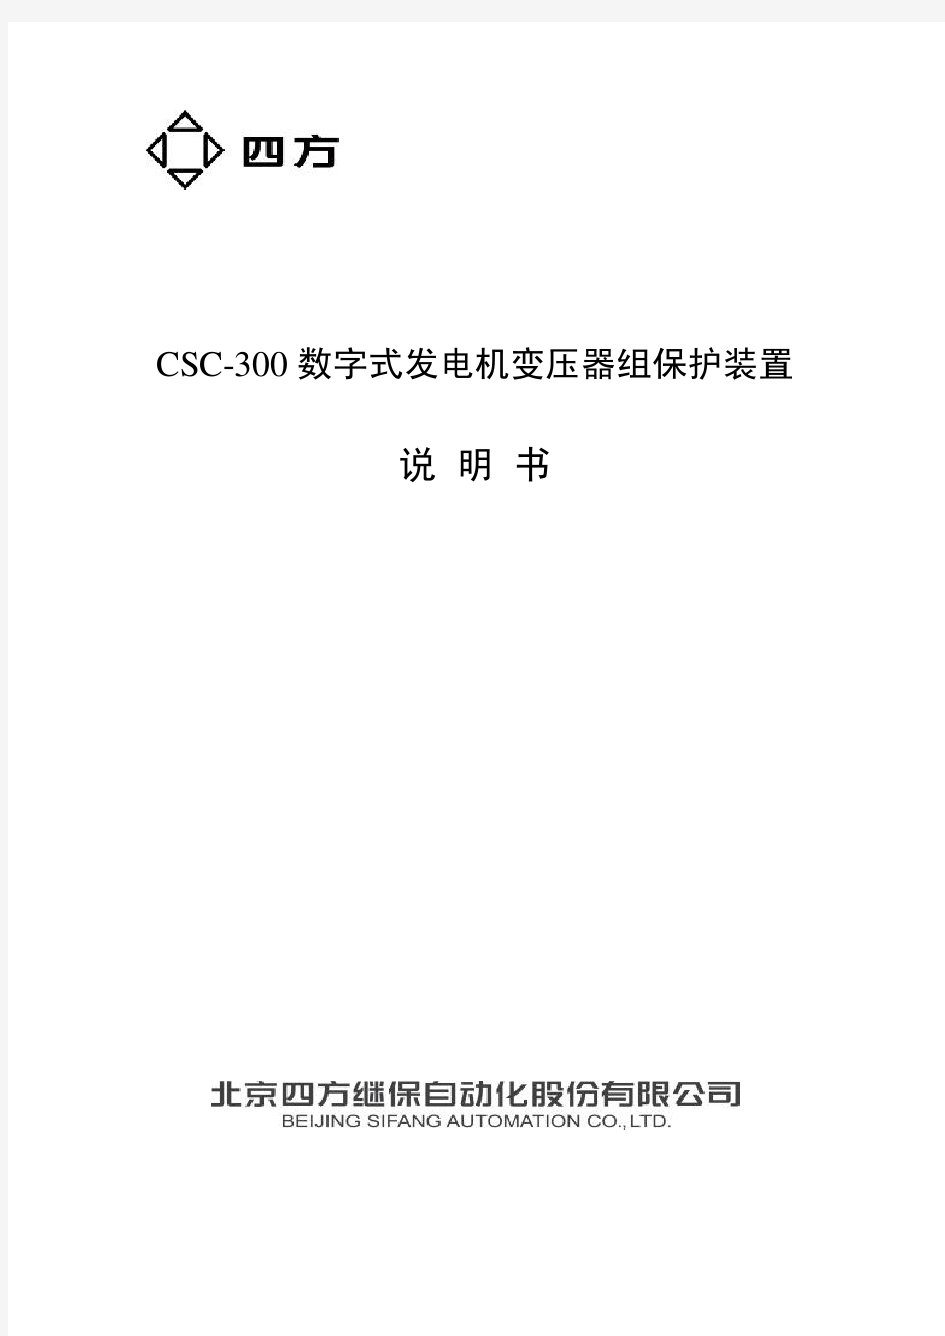 CSC-300数字式发变组保护装置说明书(0SF.460.020)_V1.13